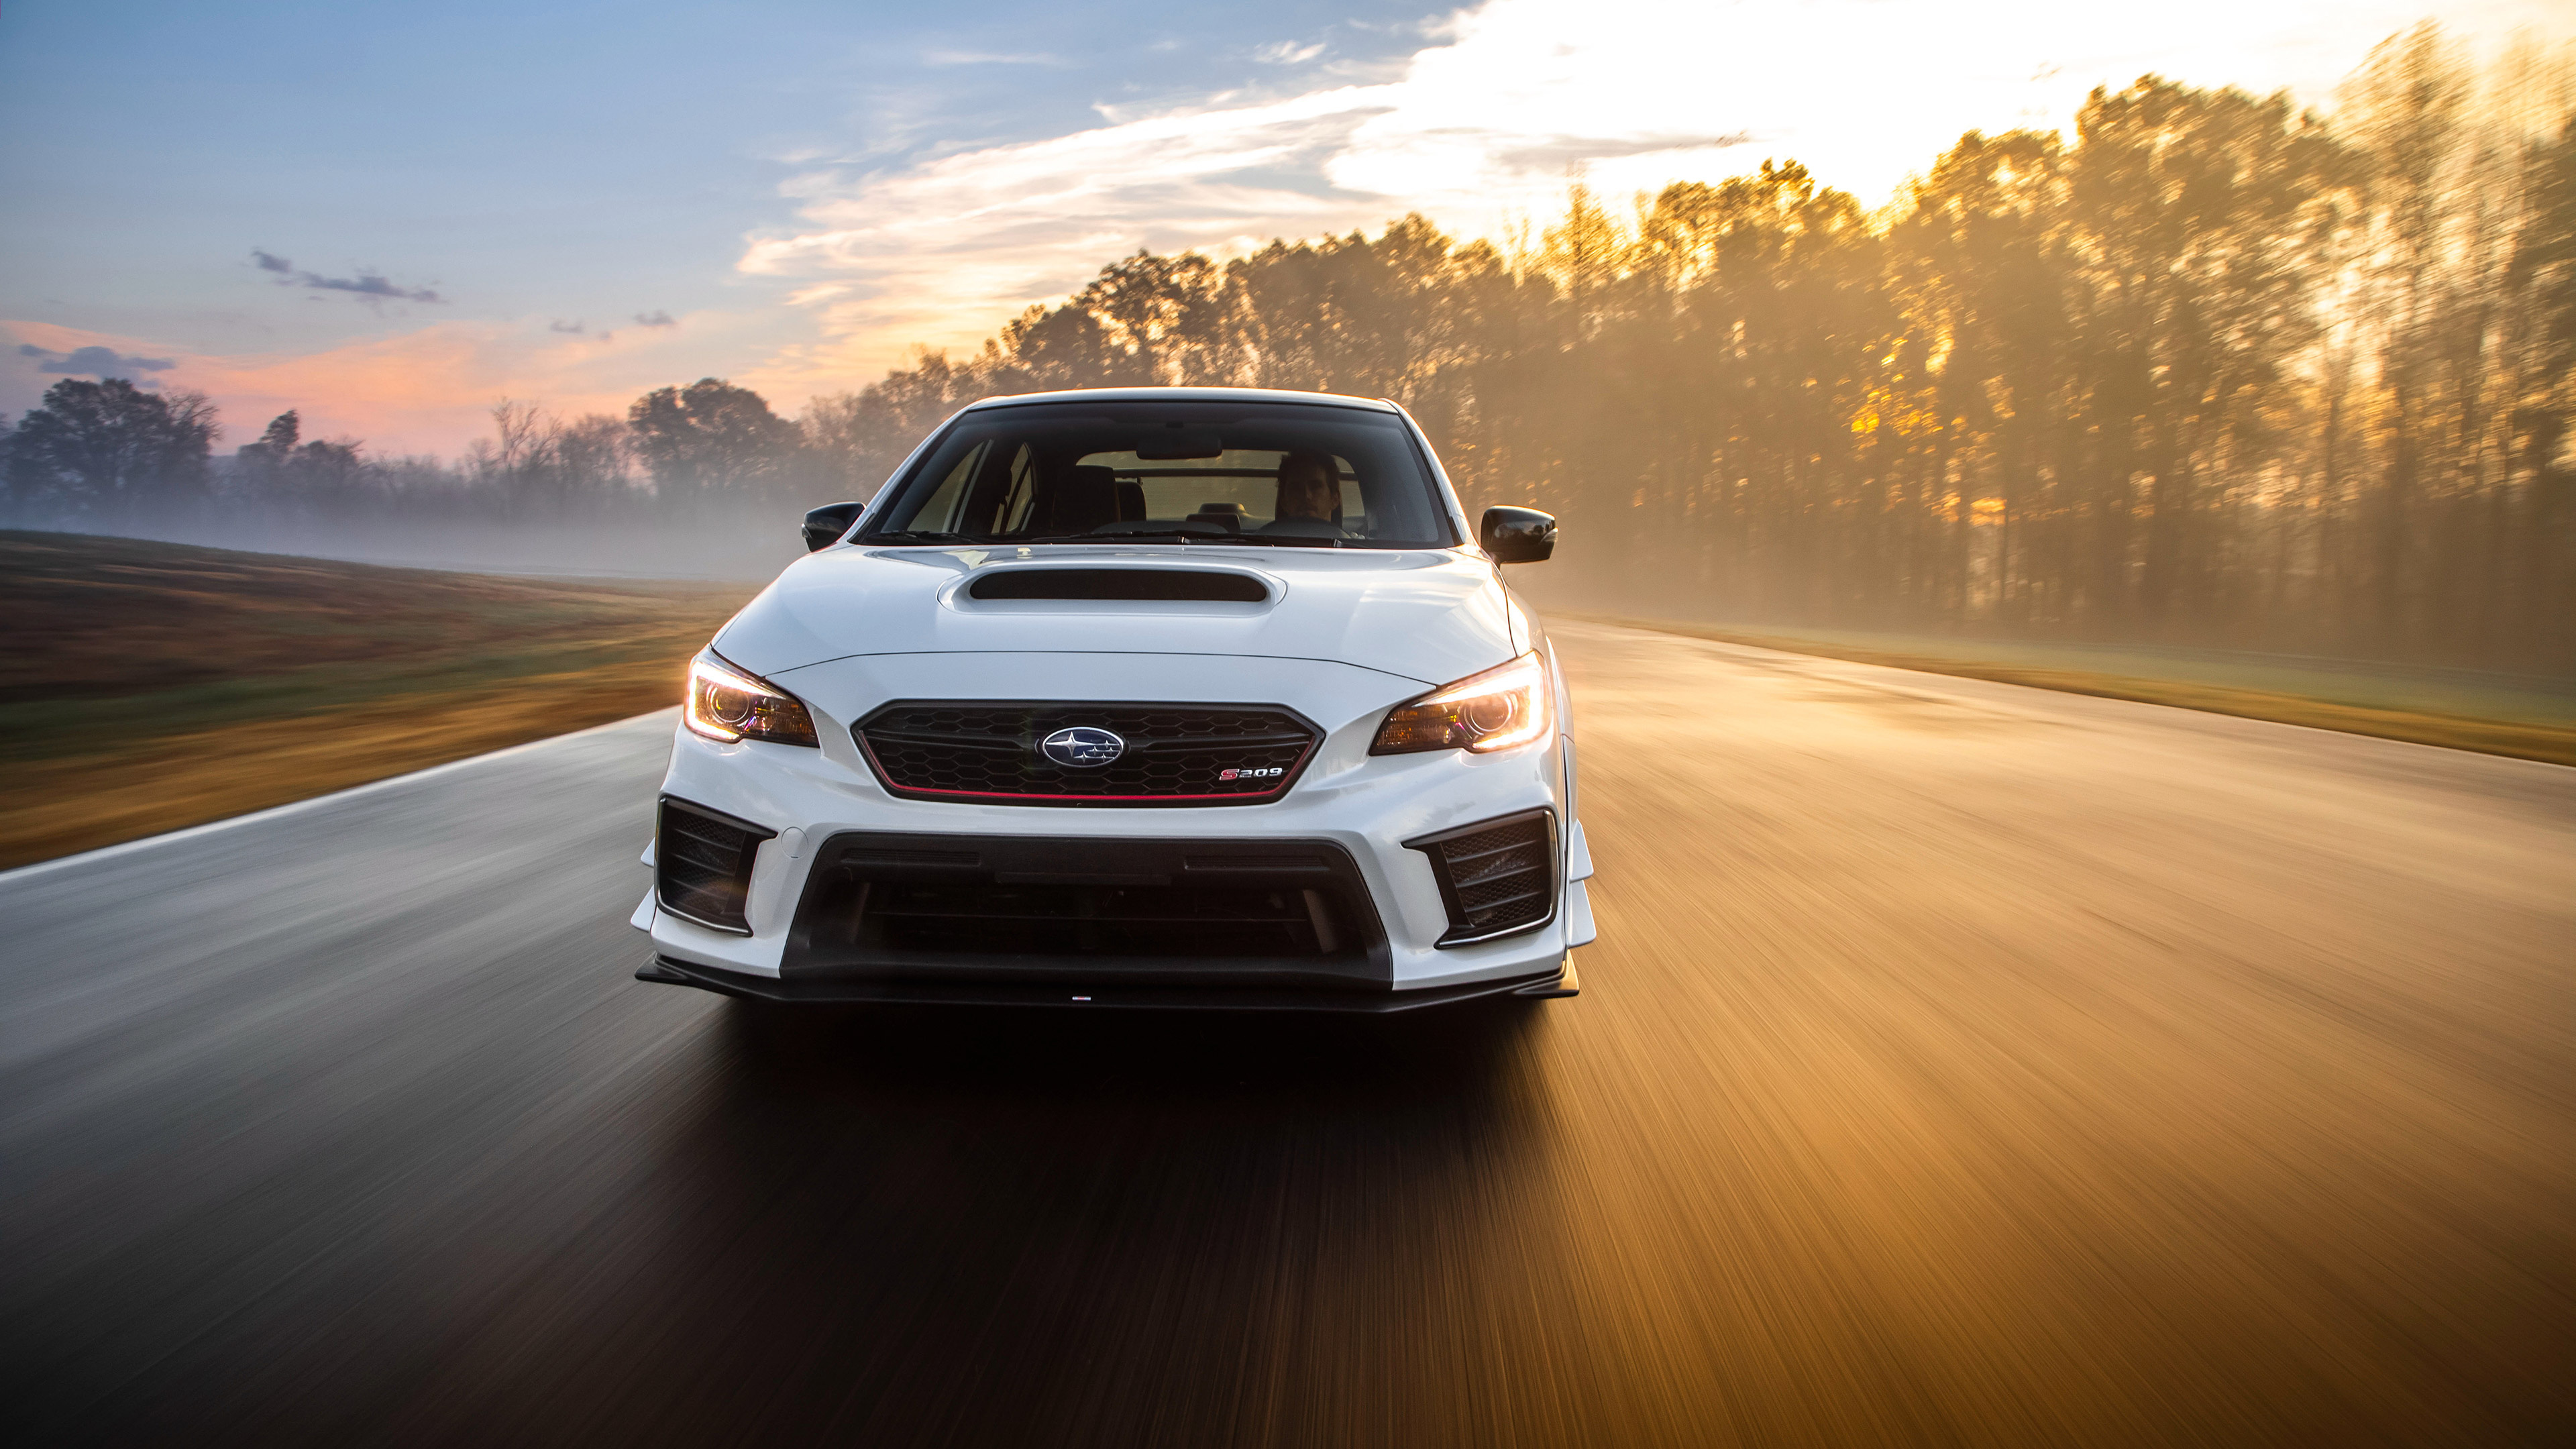 Subaru WRX, Motion blur masterpiece, High-definition wallpaper, Stunning road presence, 3840x2160 4K Desktop